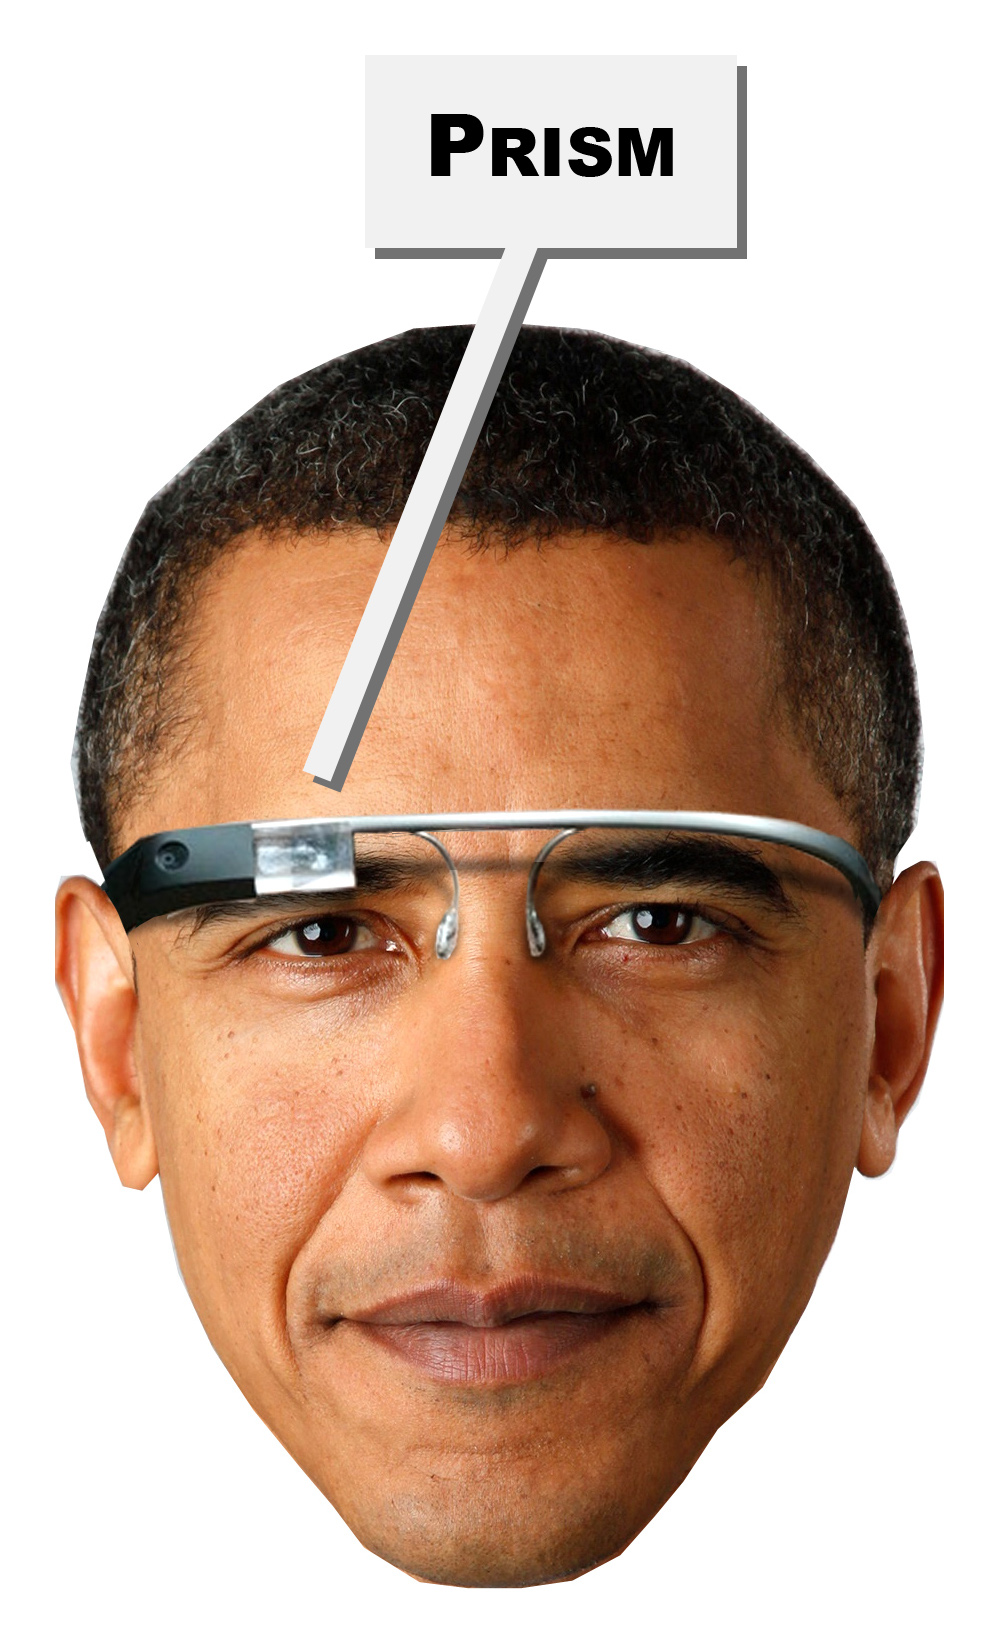 http://fffff.at/files/2013/06/obama-glass-prism-label.jpg